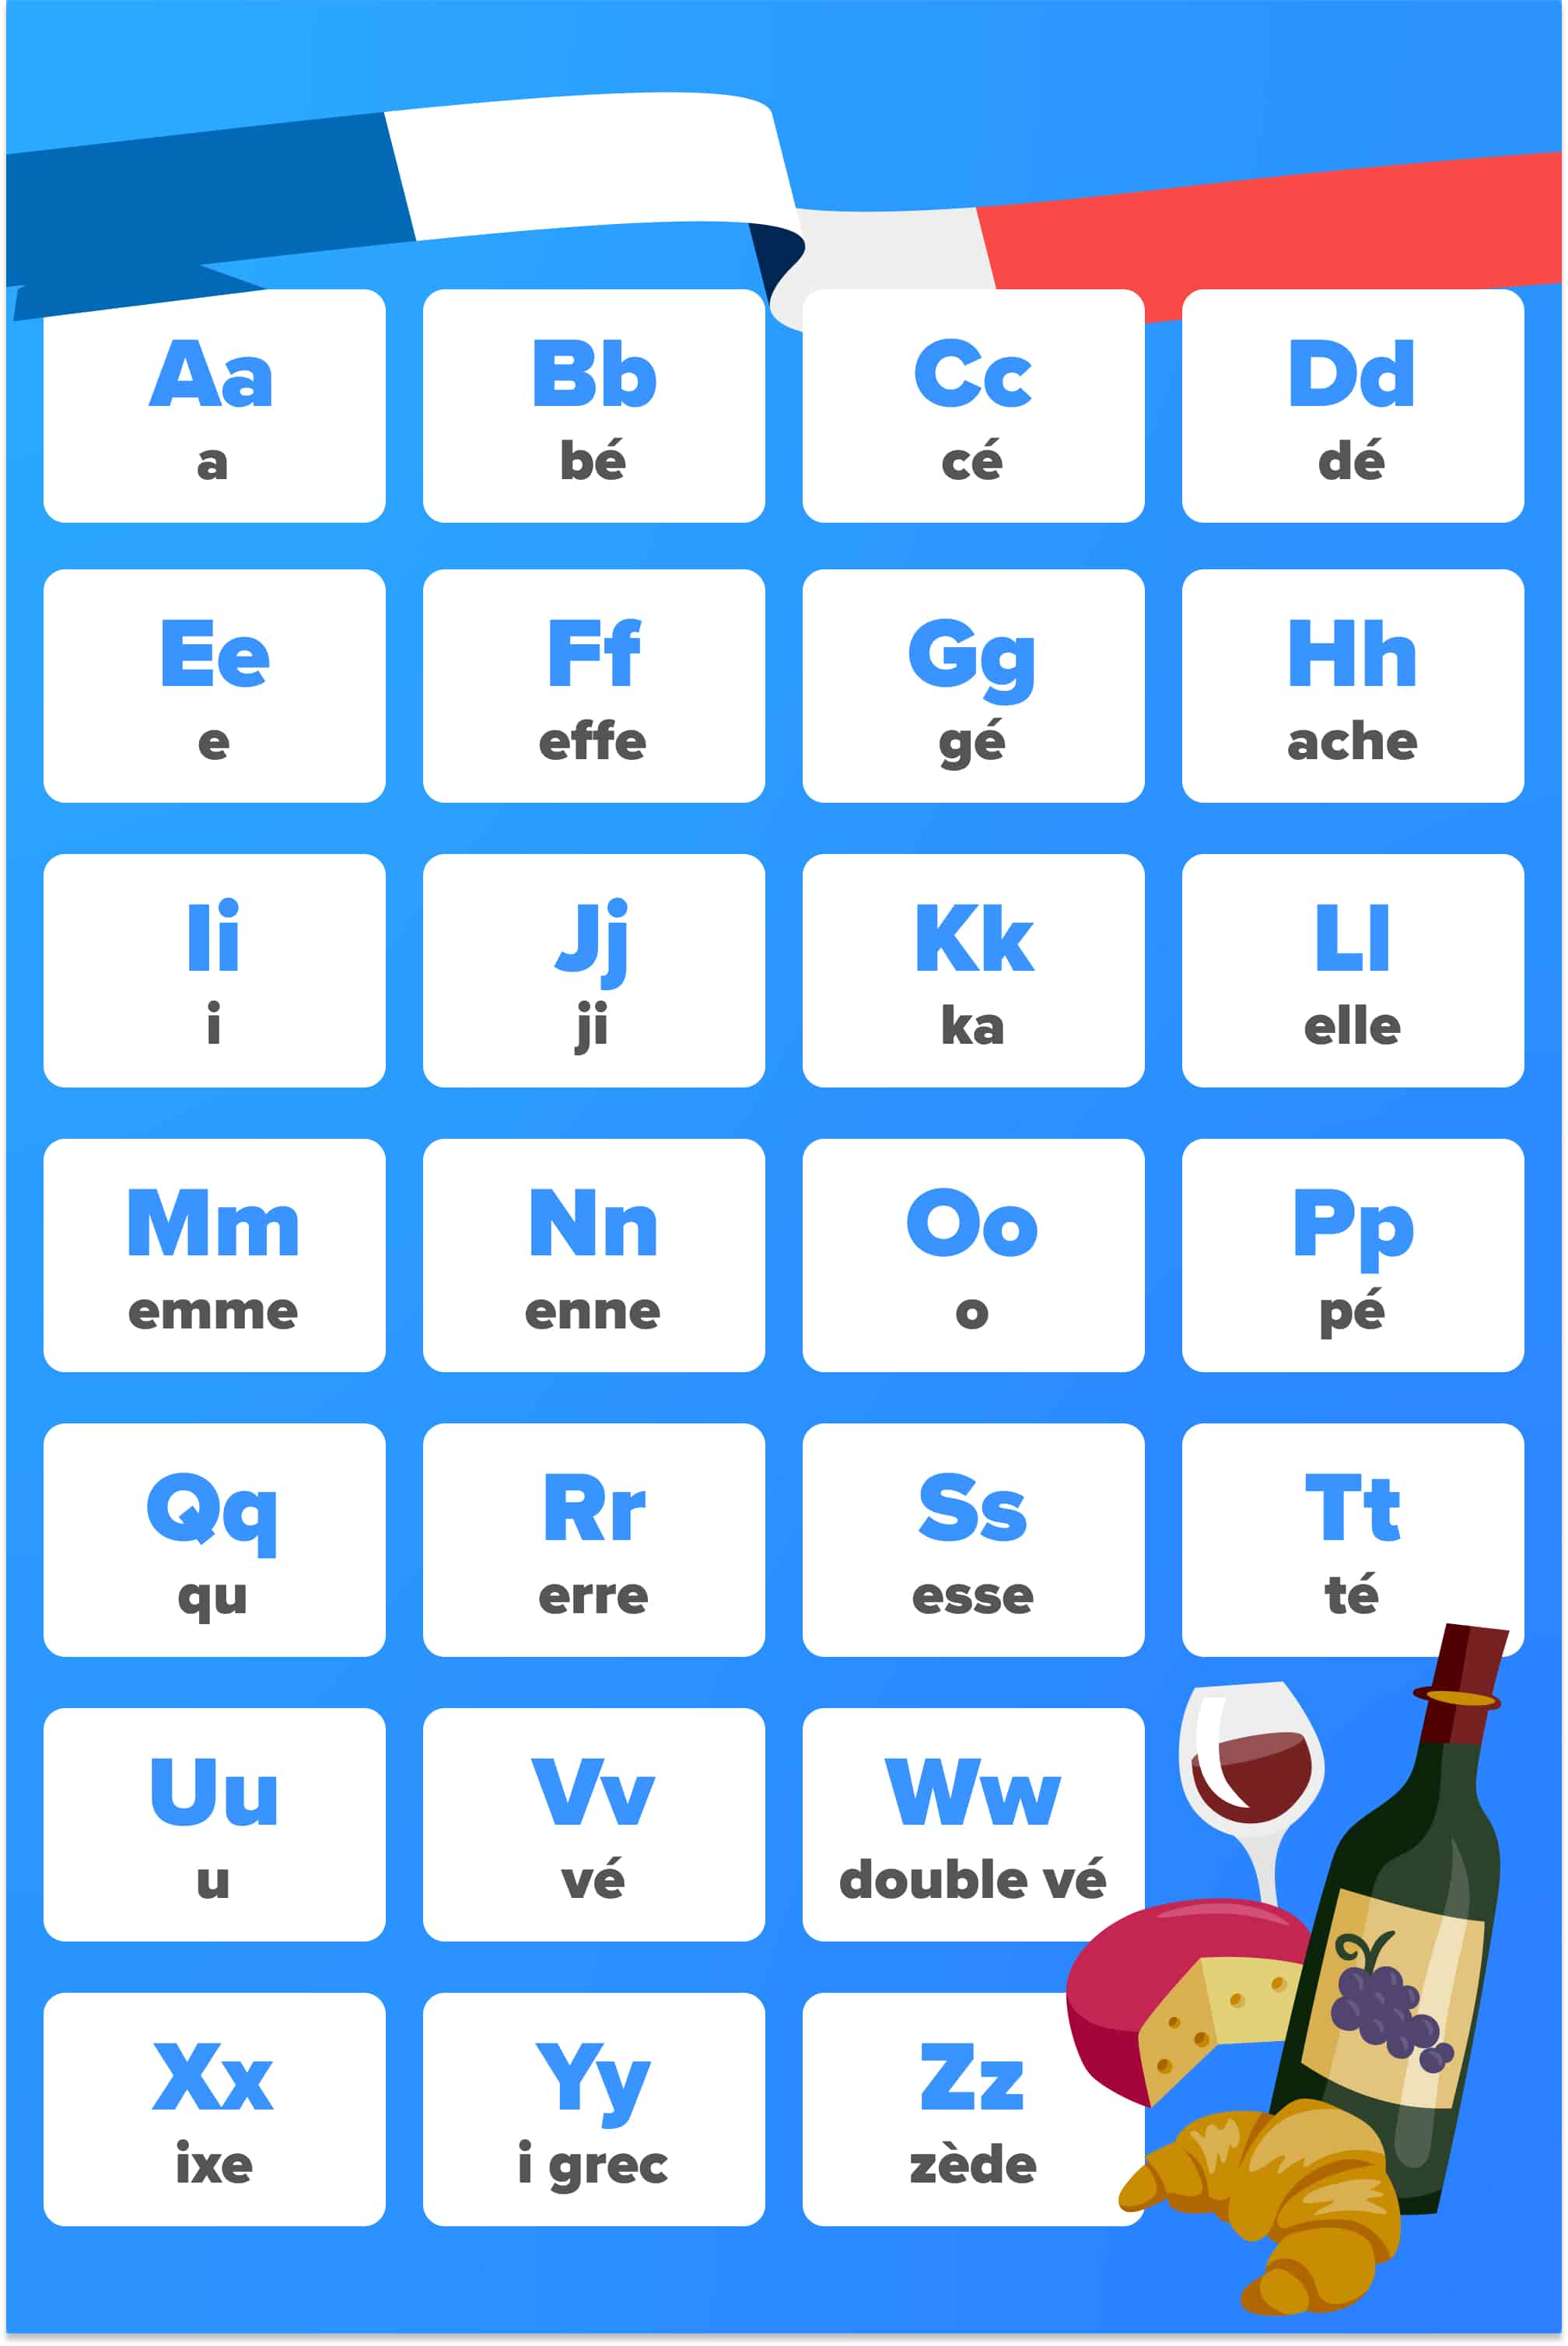 french-alphabet-infographic